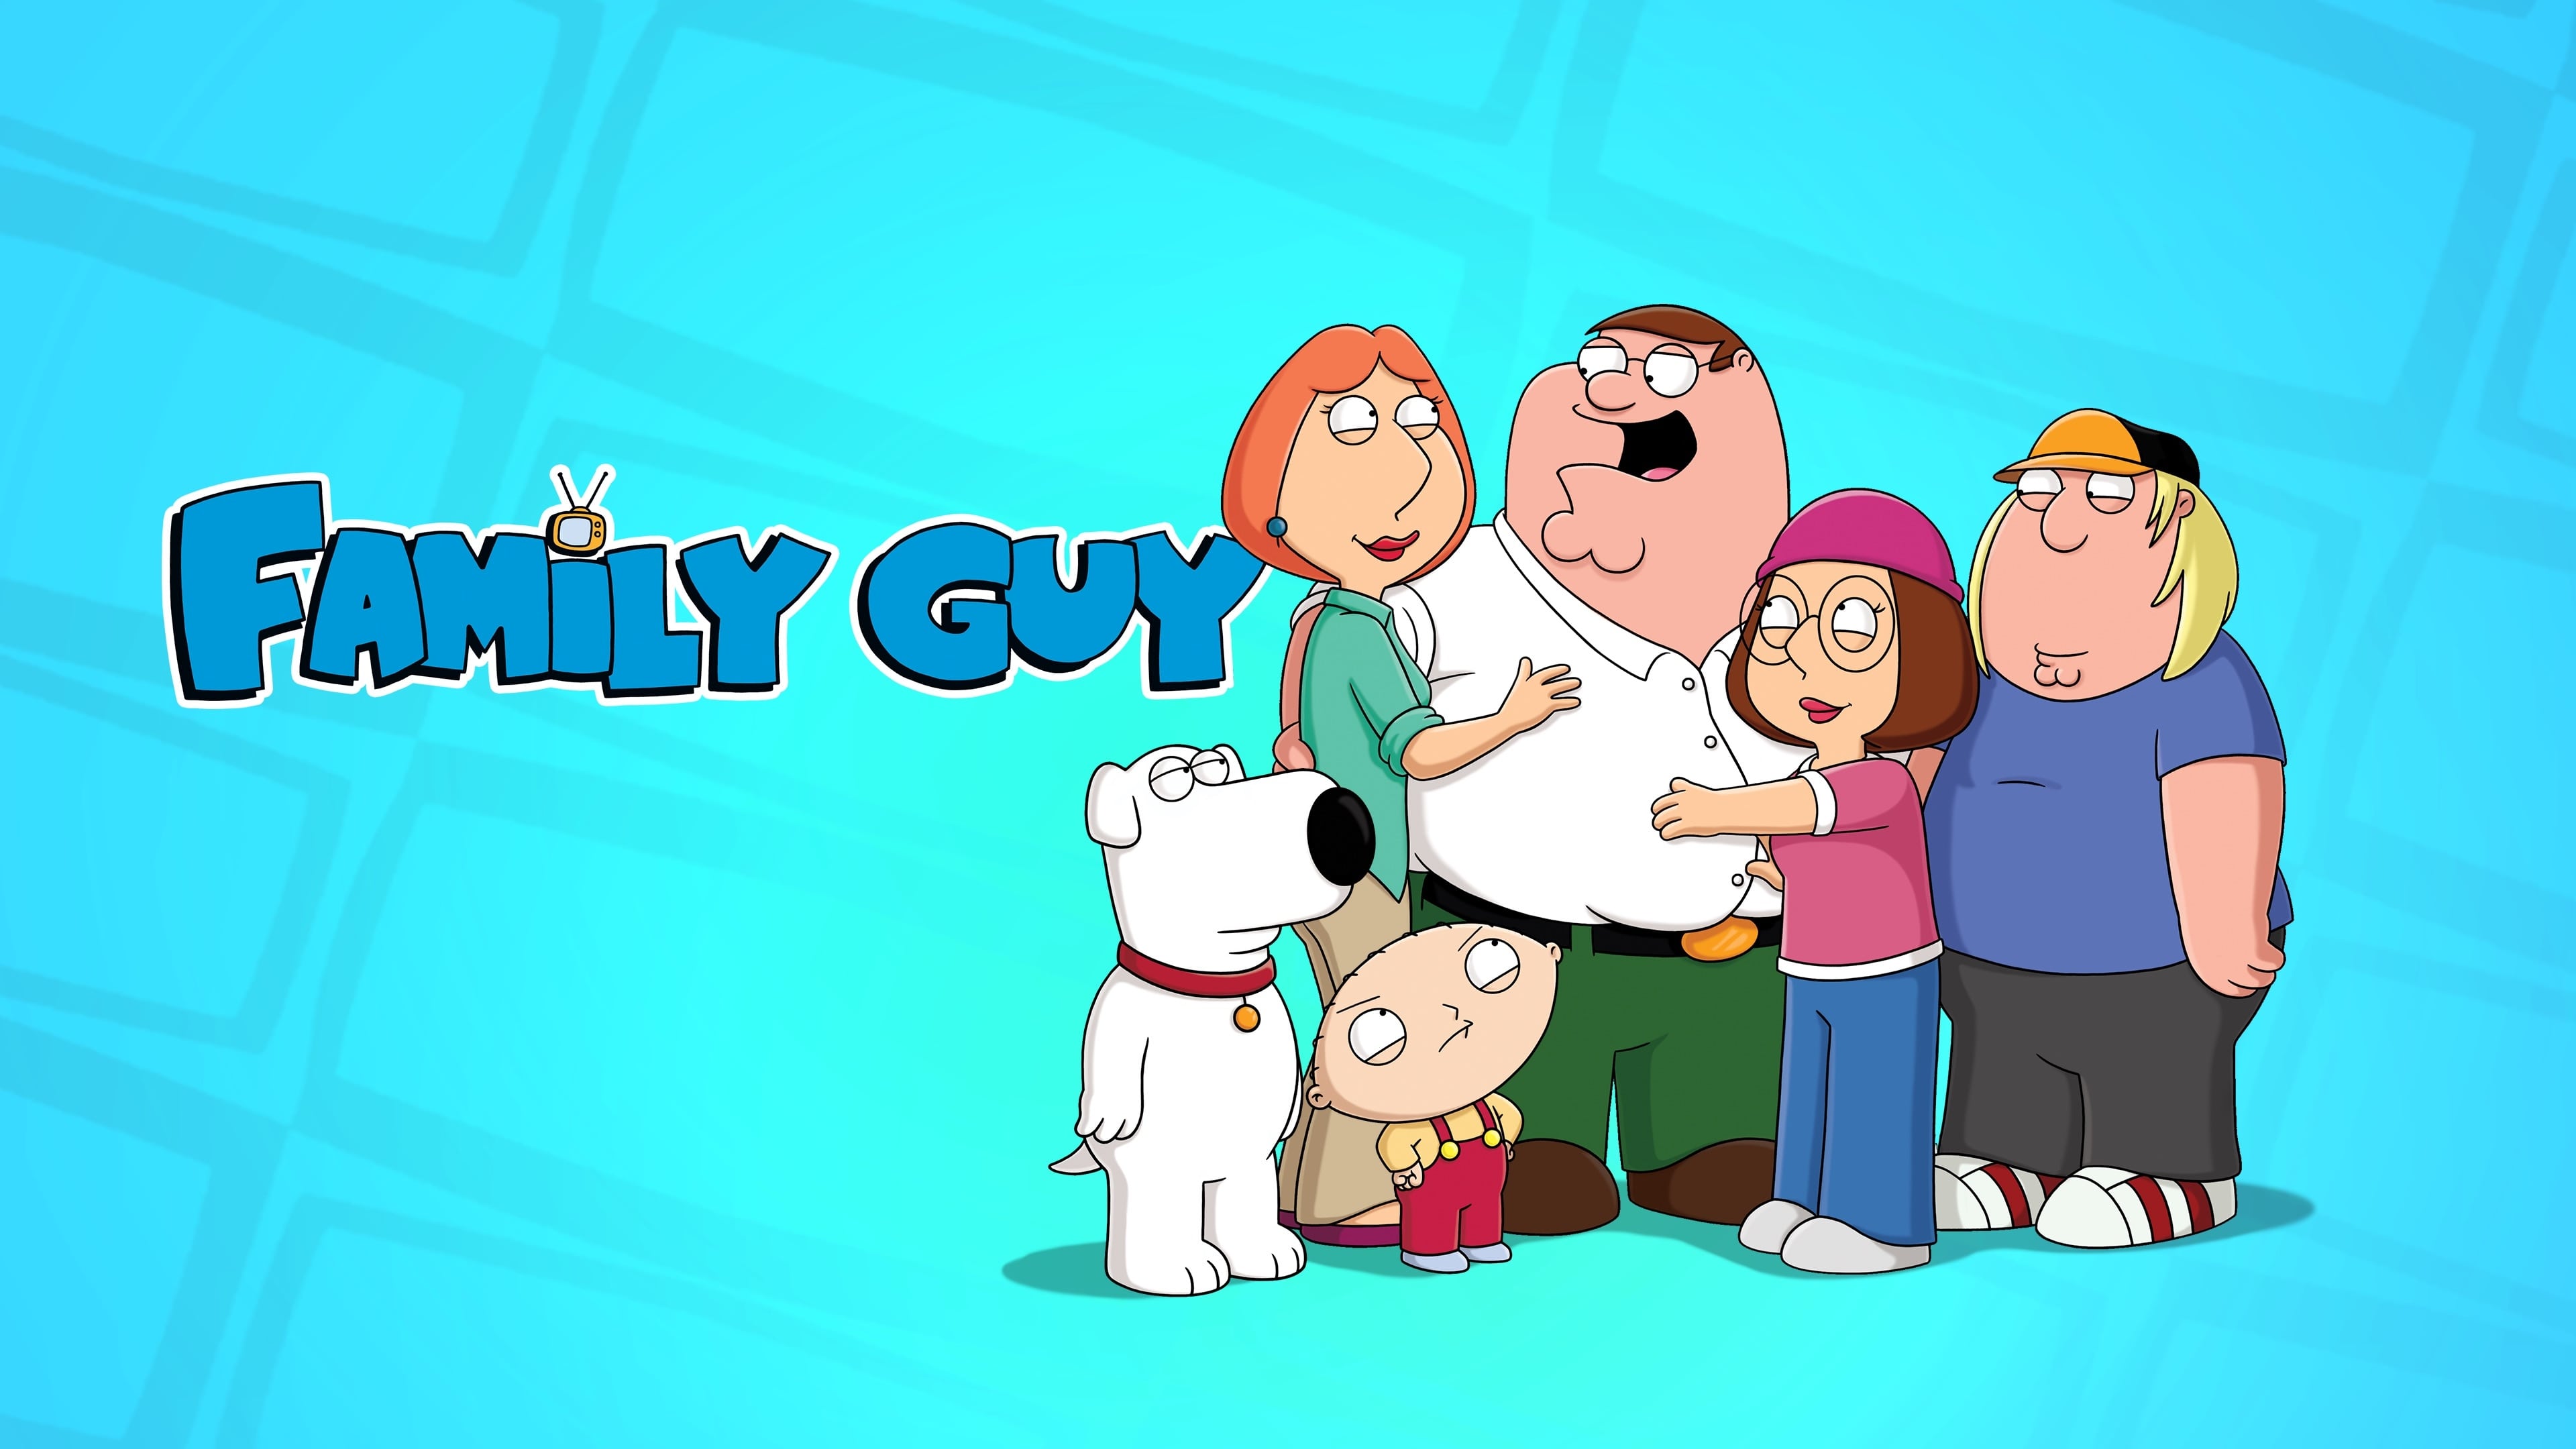 Family Guy - Season 15